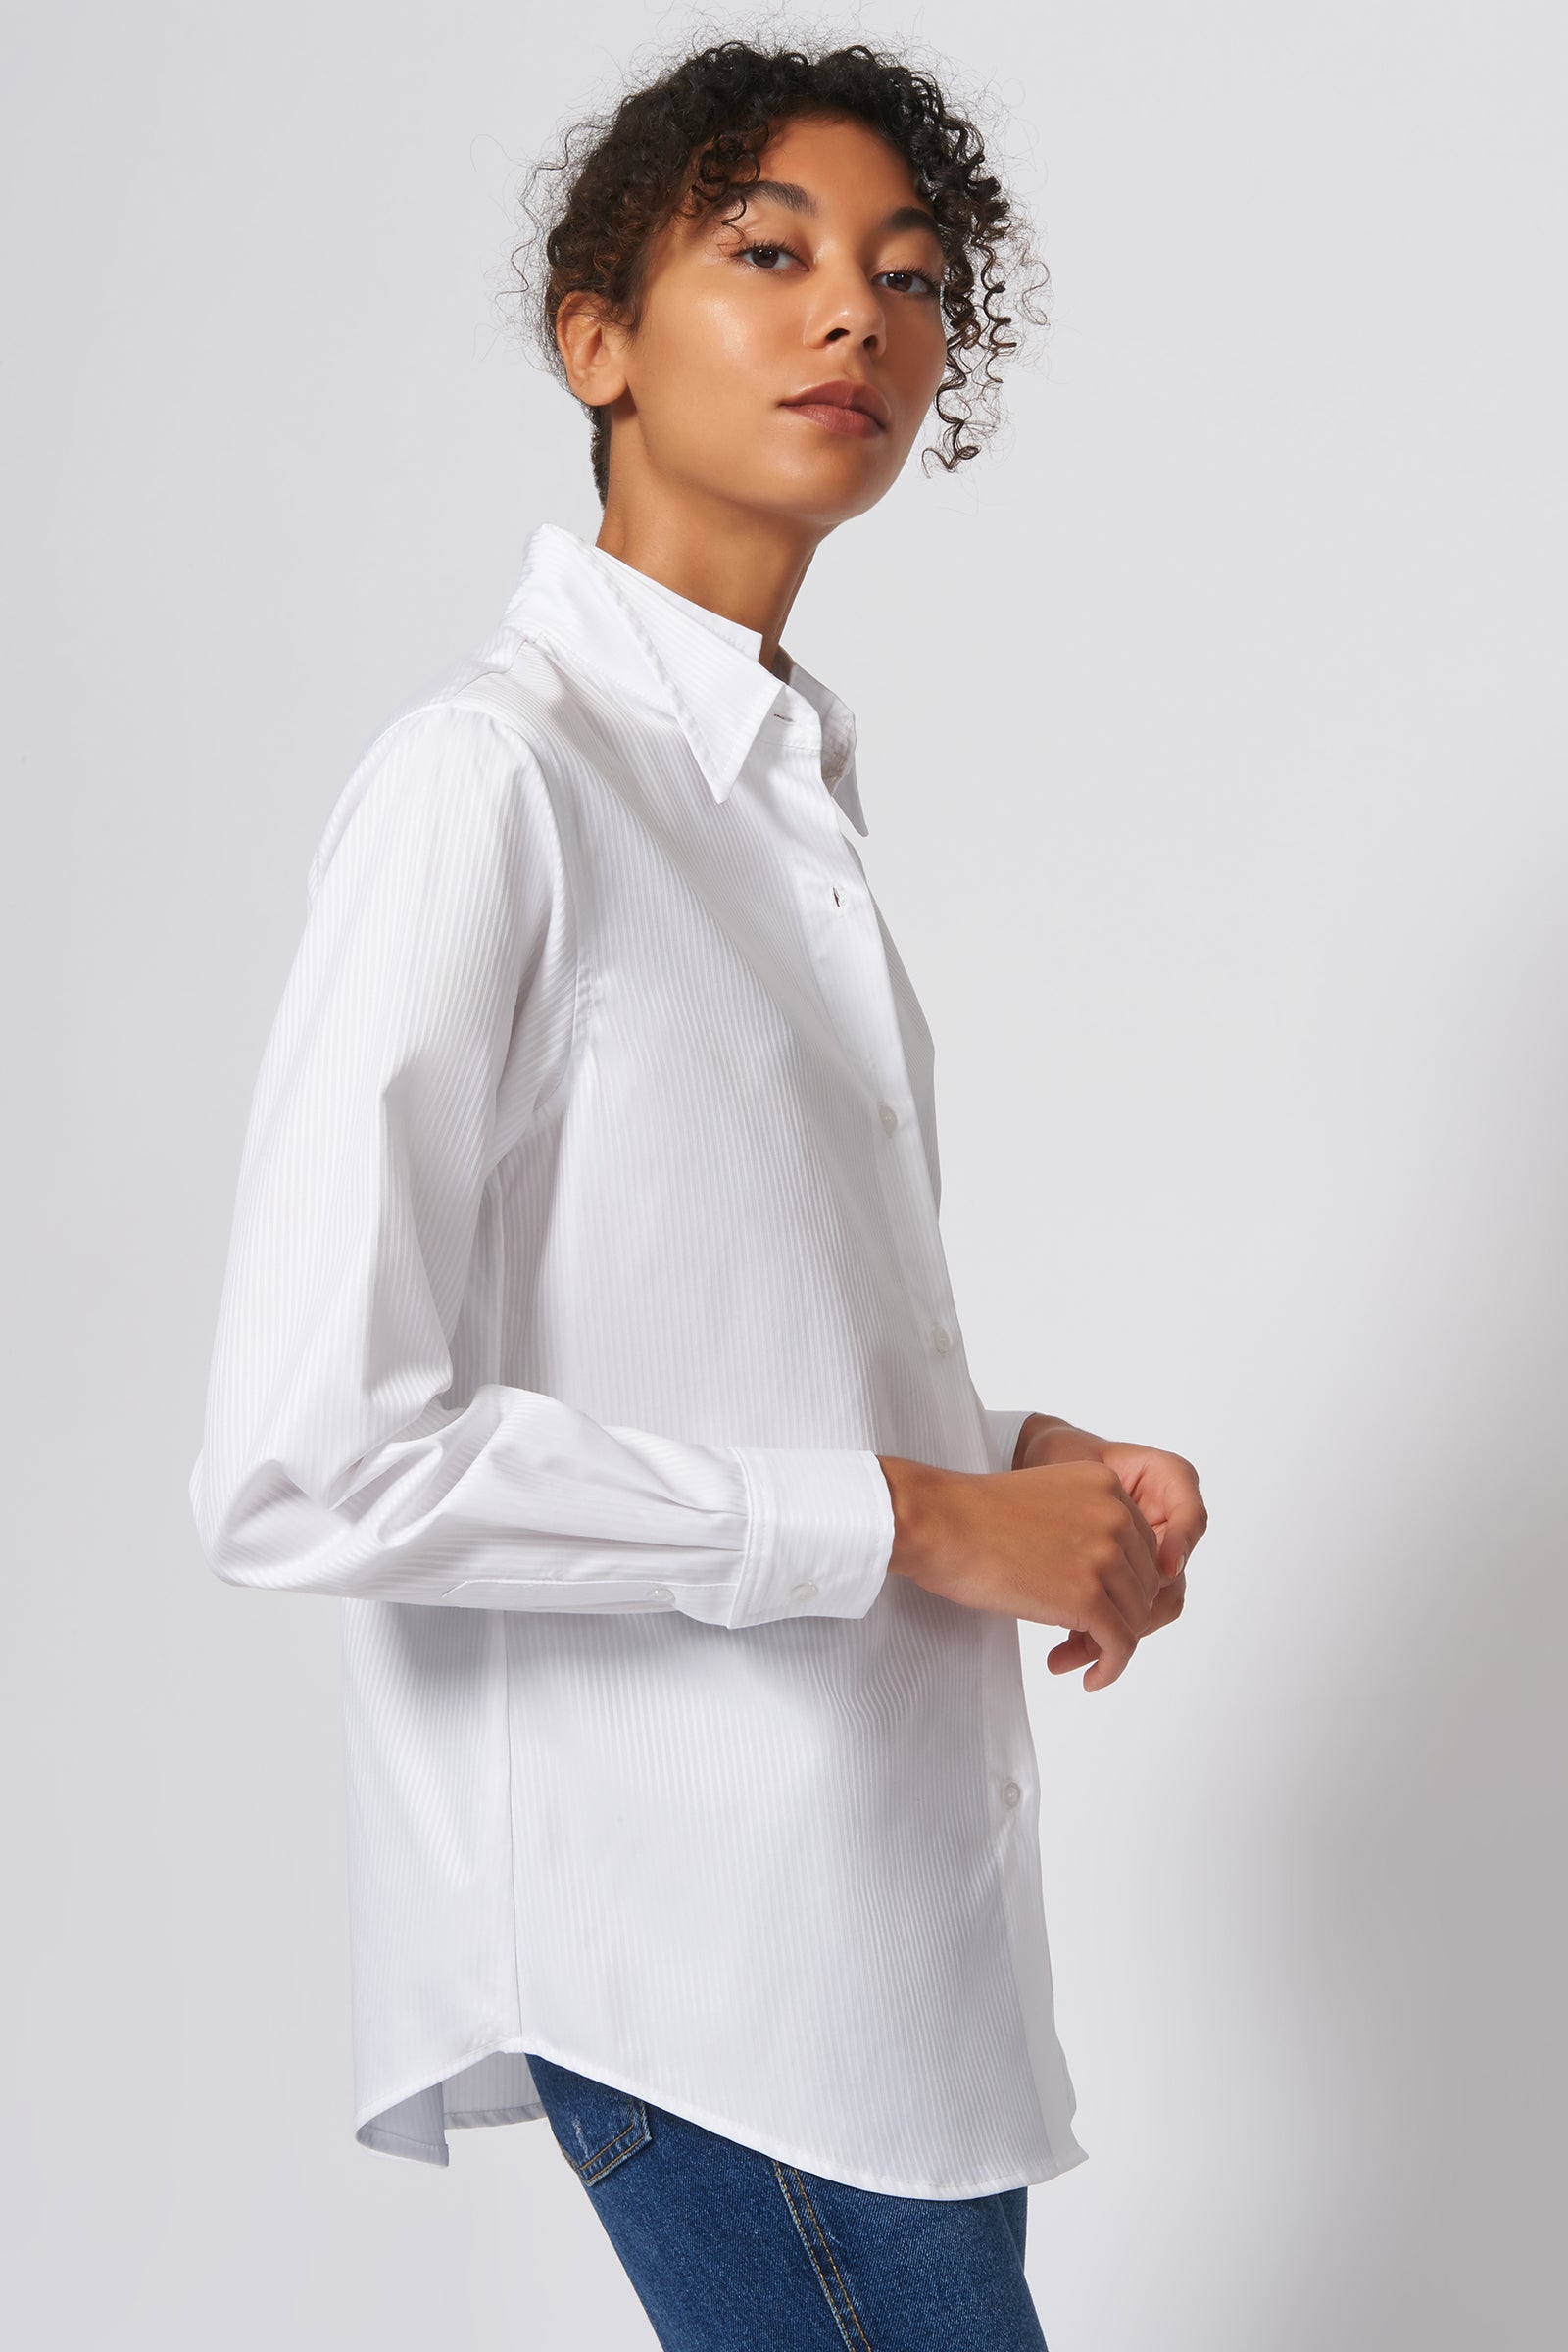 Kal Rieman Double Collar Shirt in White Satin Stripe on Model Front View